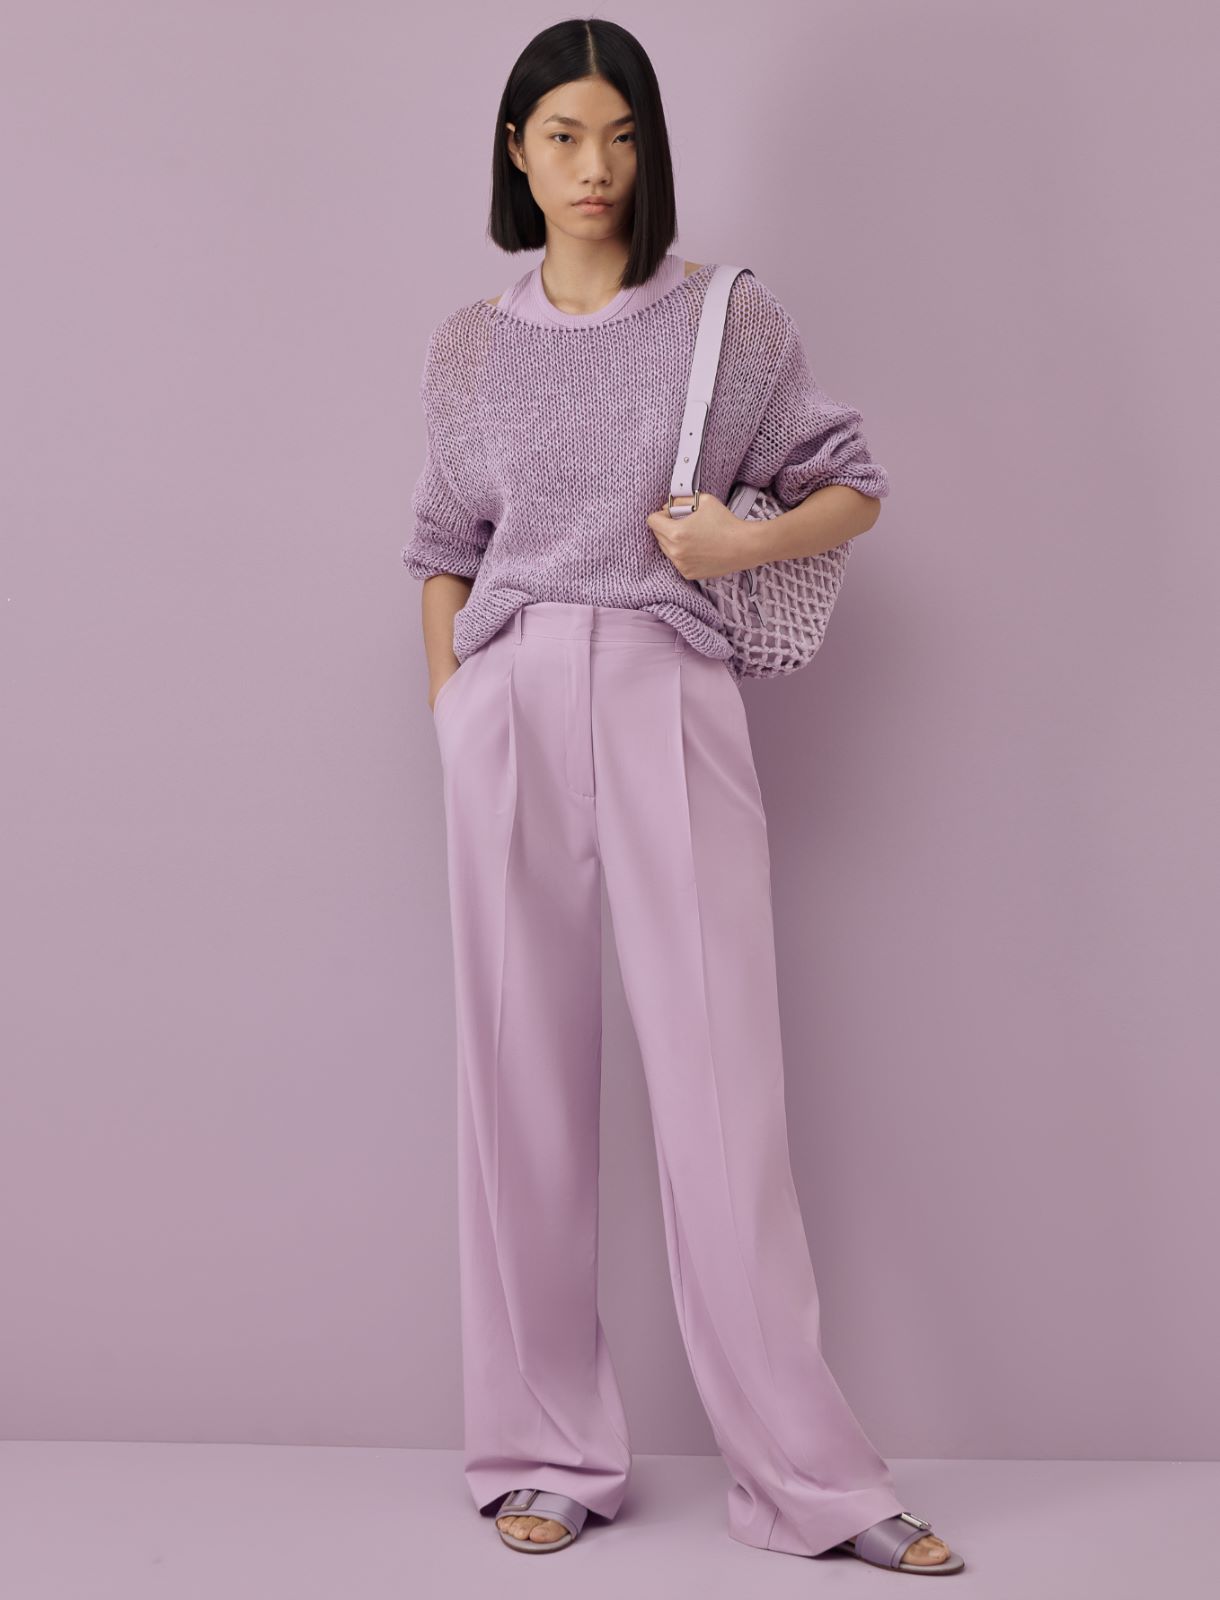 Ribbon sweater - Lilac - Marina Rinaldi